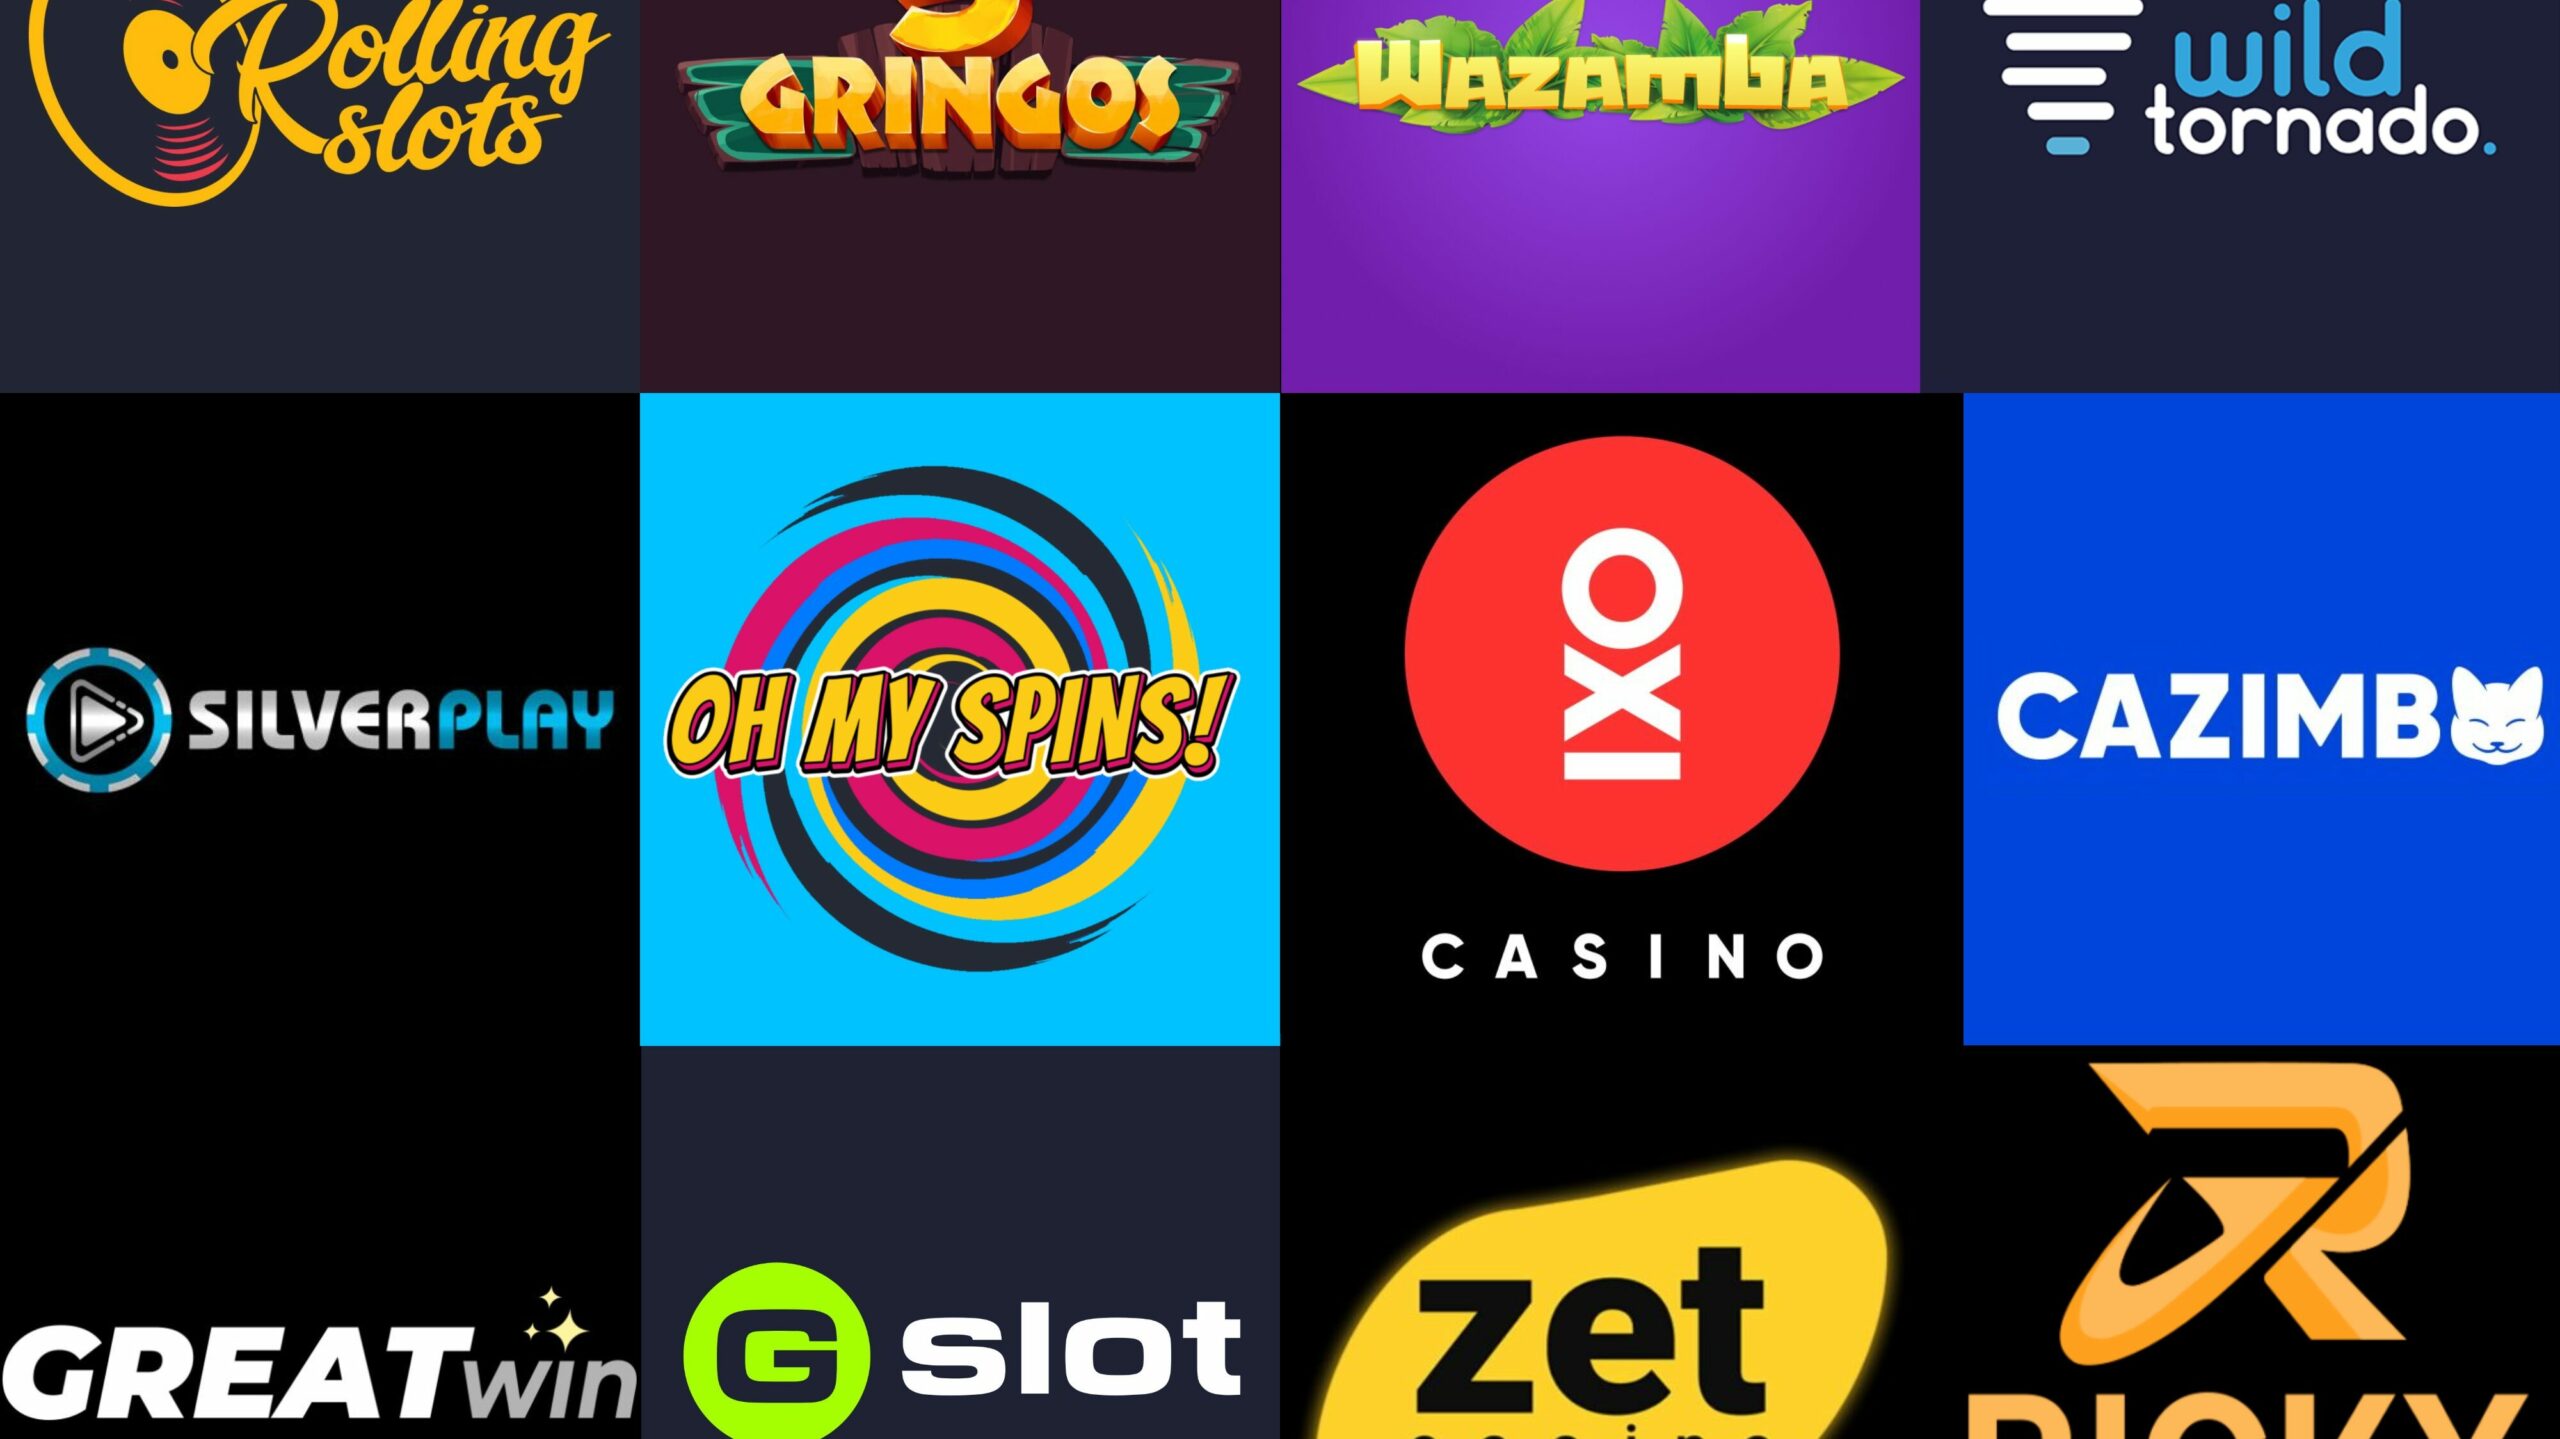 online casinos ohne 5 sekunden regel